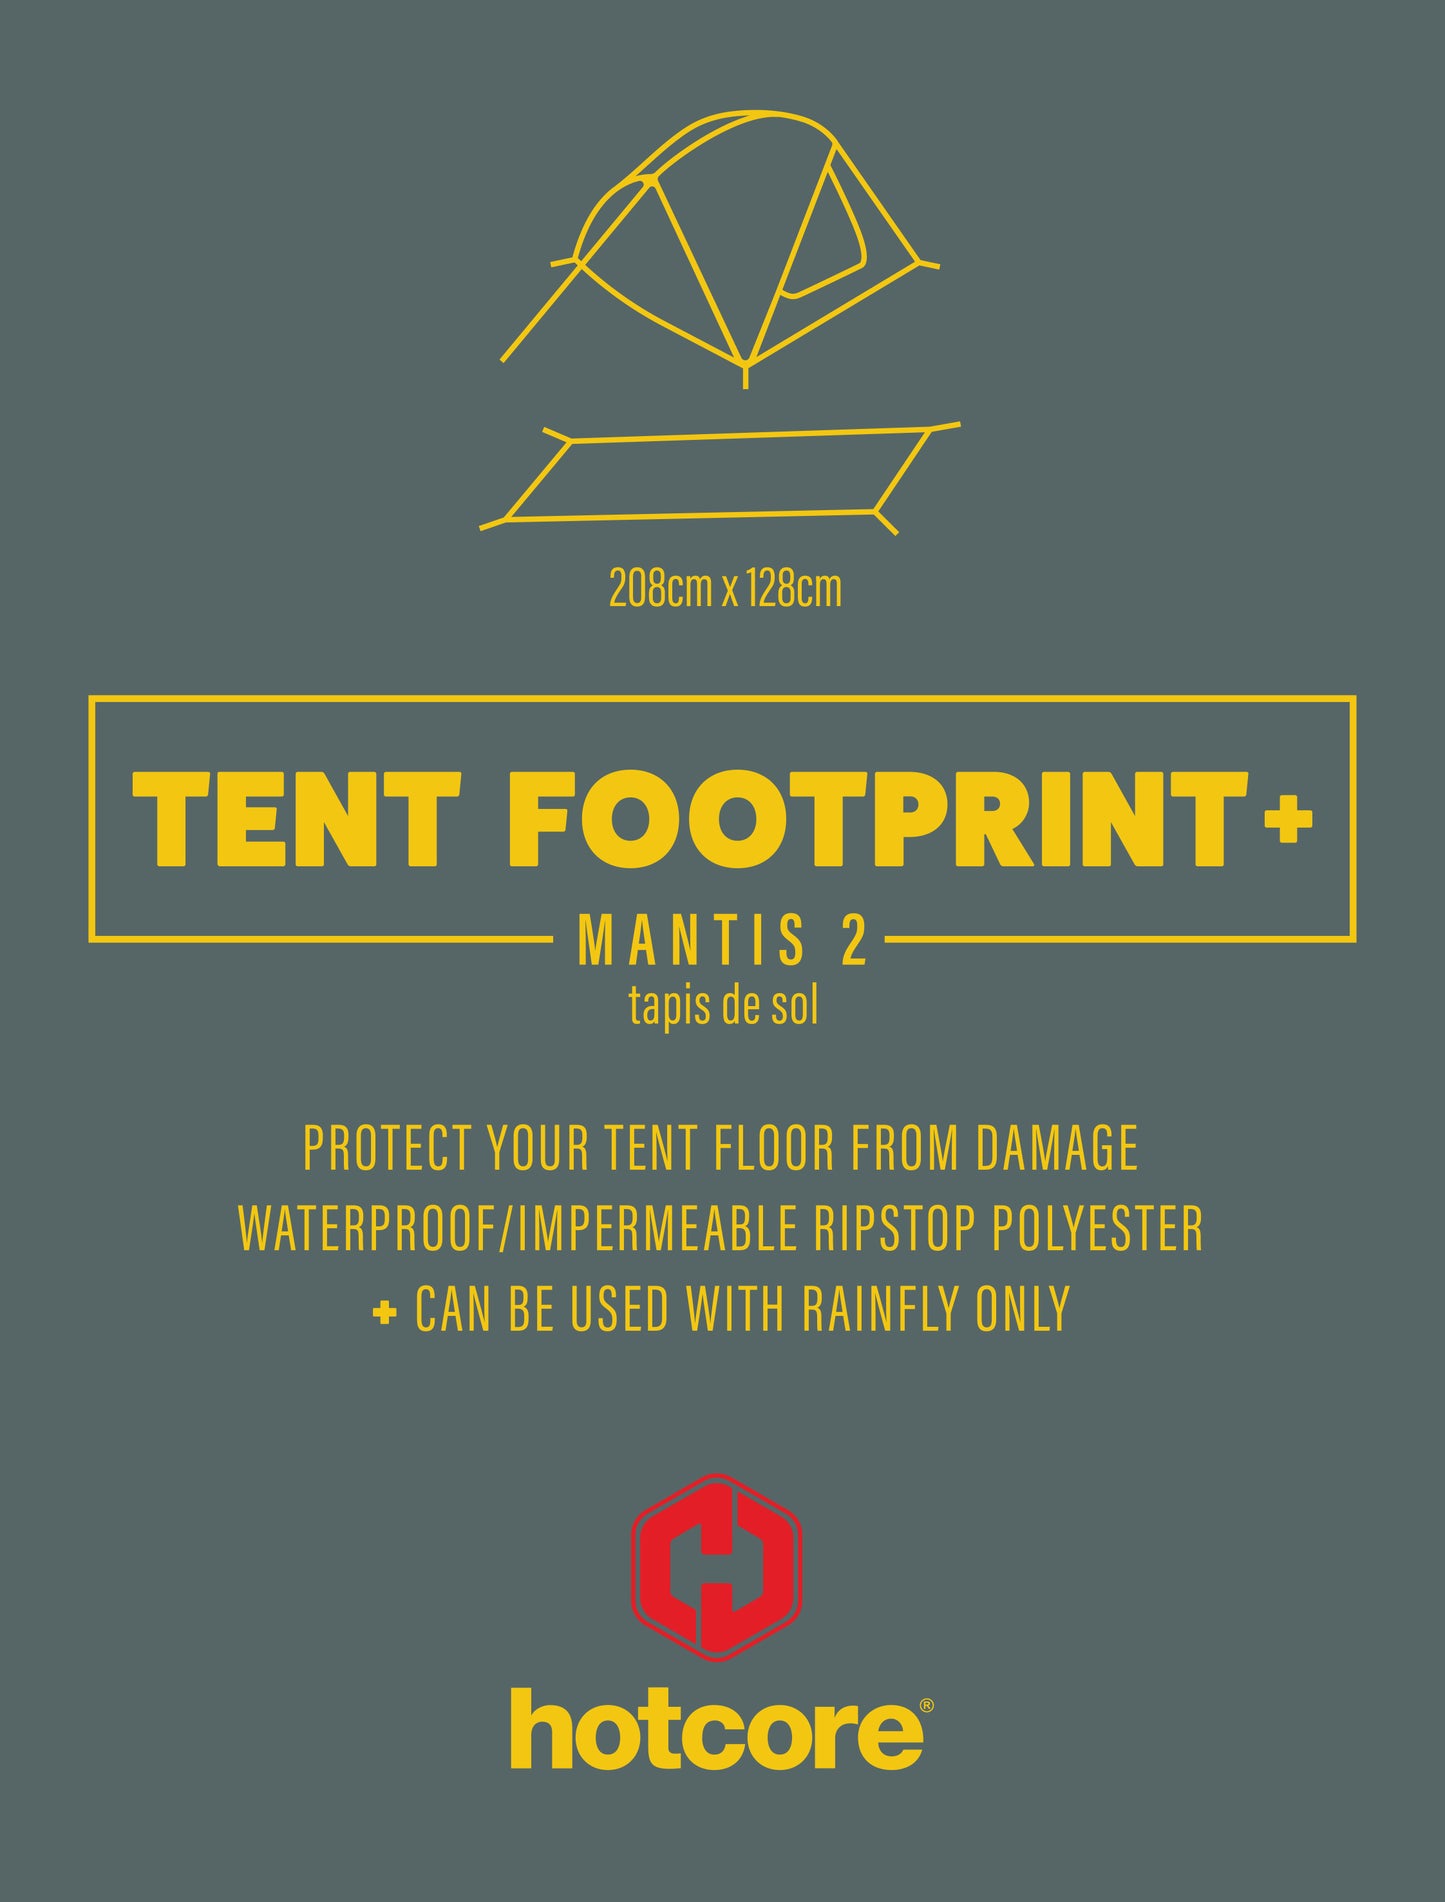 Hotcore - Mantis Tent Footprint